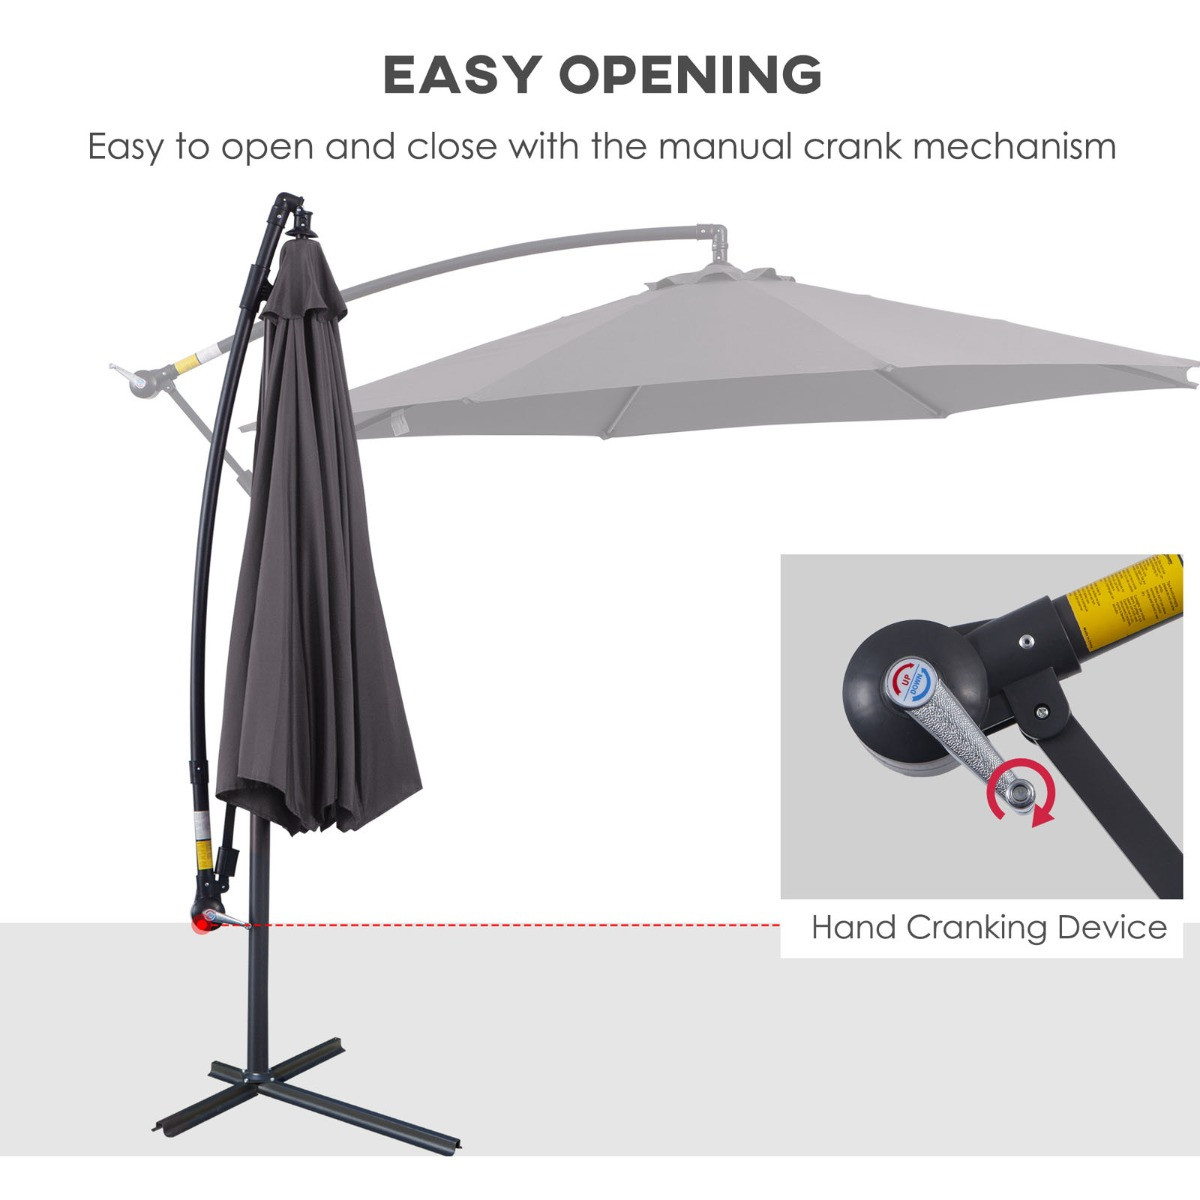 Outsunny Cantilever Parasol Umbrella, Charcoal - 3M>